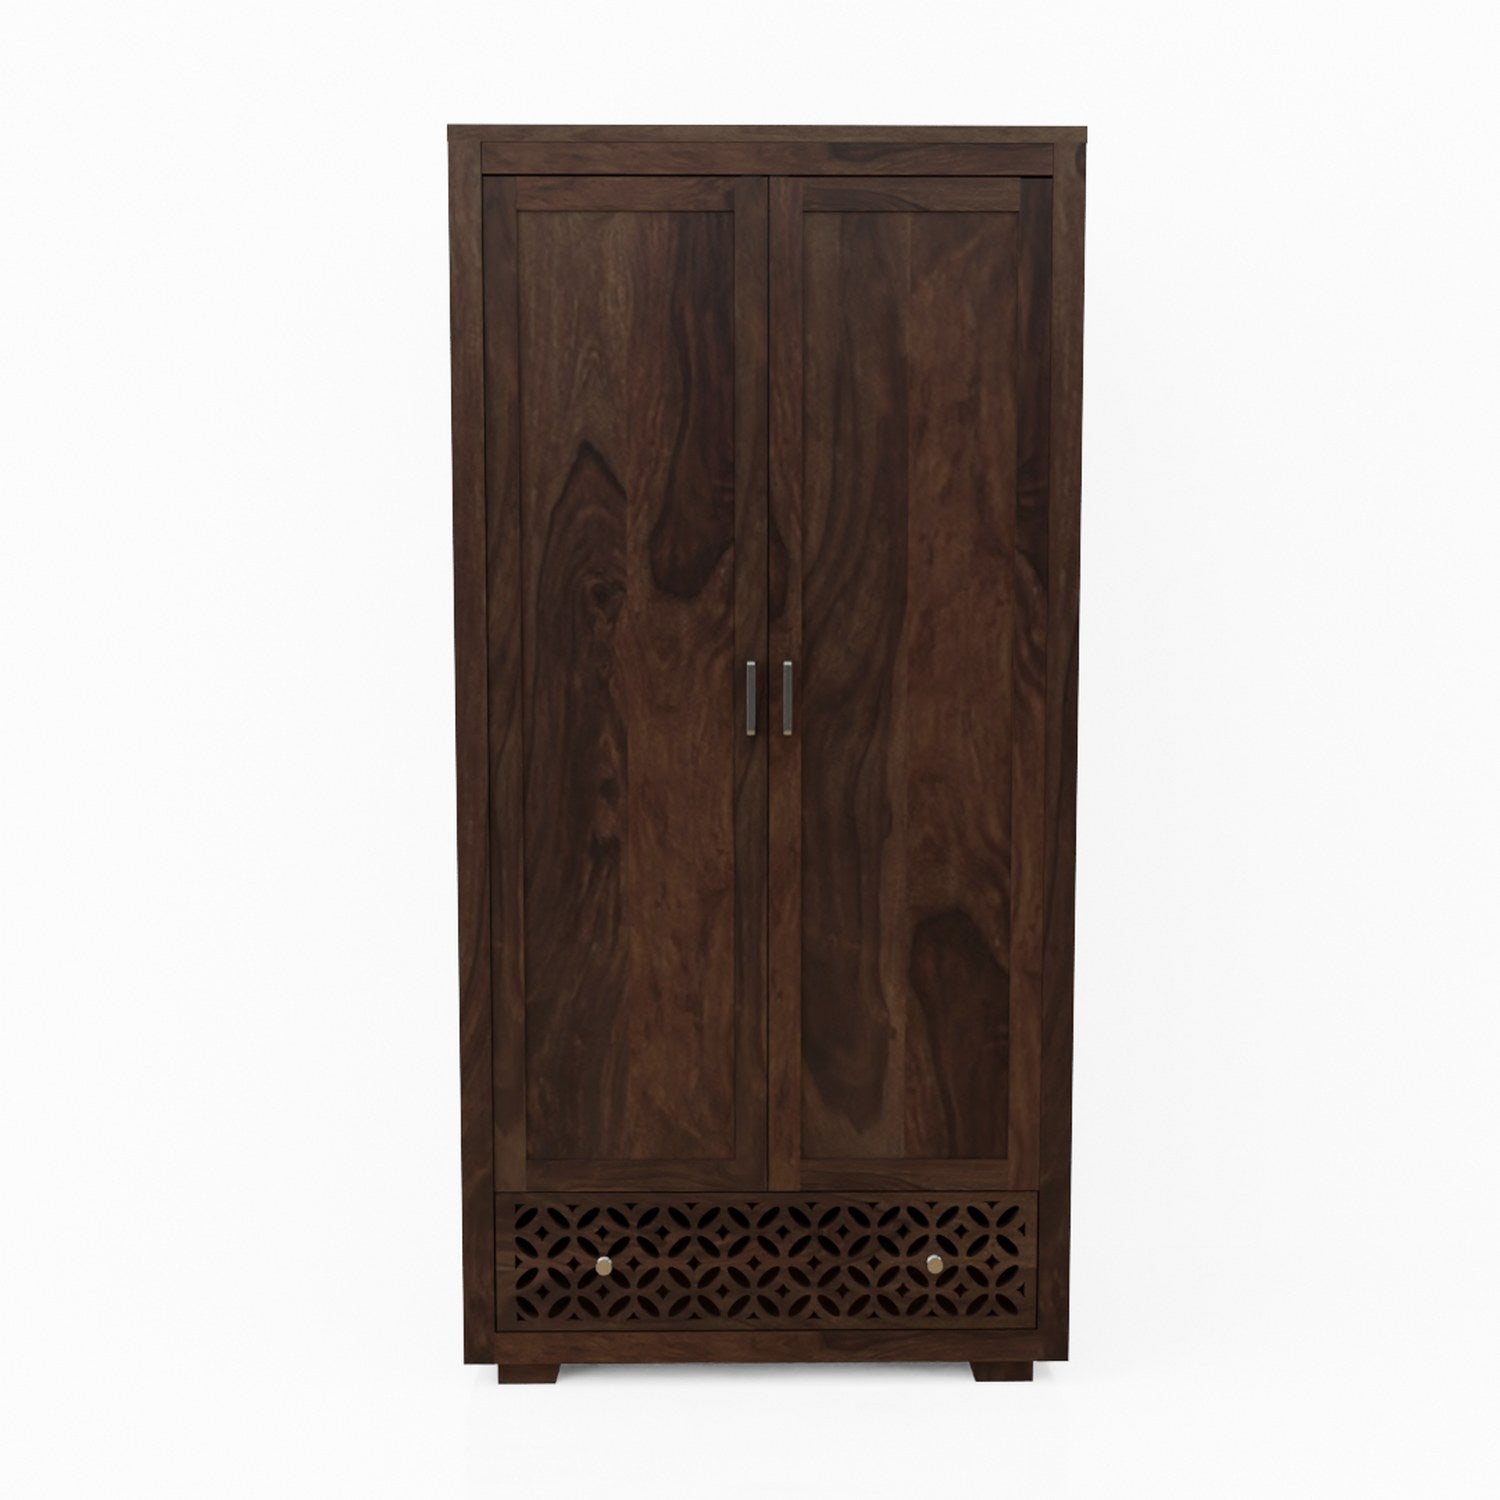 Monstro Solid Sheesham Wood Double Door Wardrobe With Drawers (Walnut Finish)